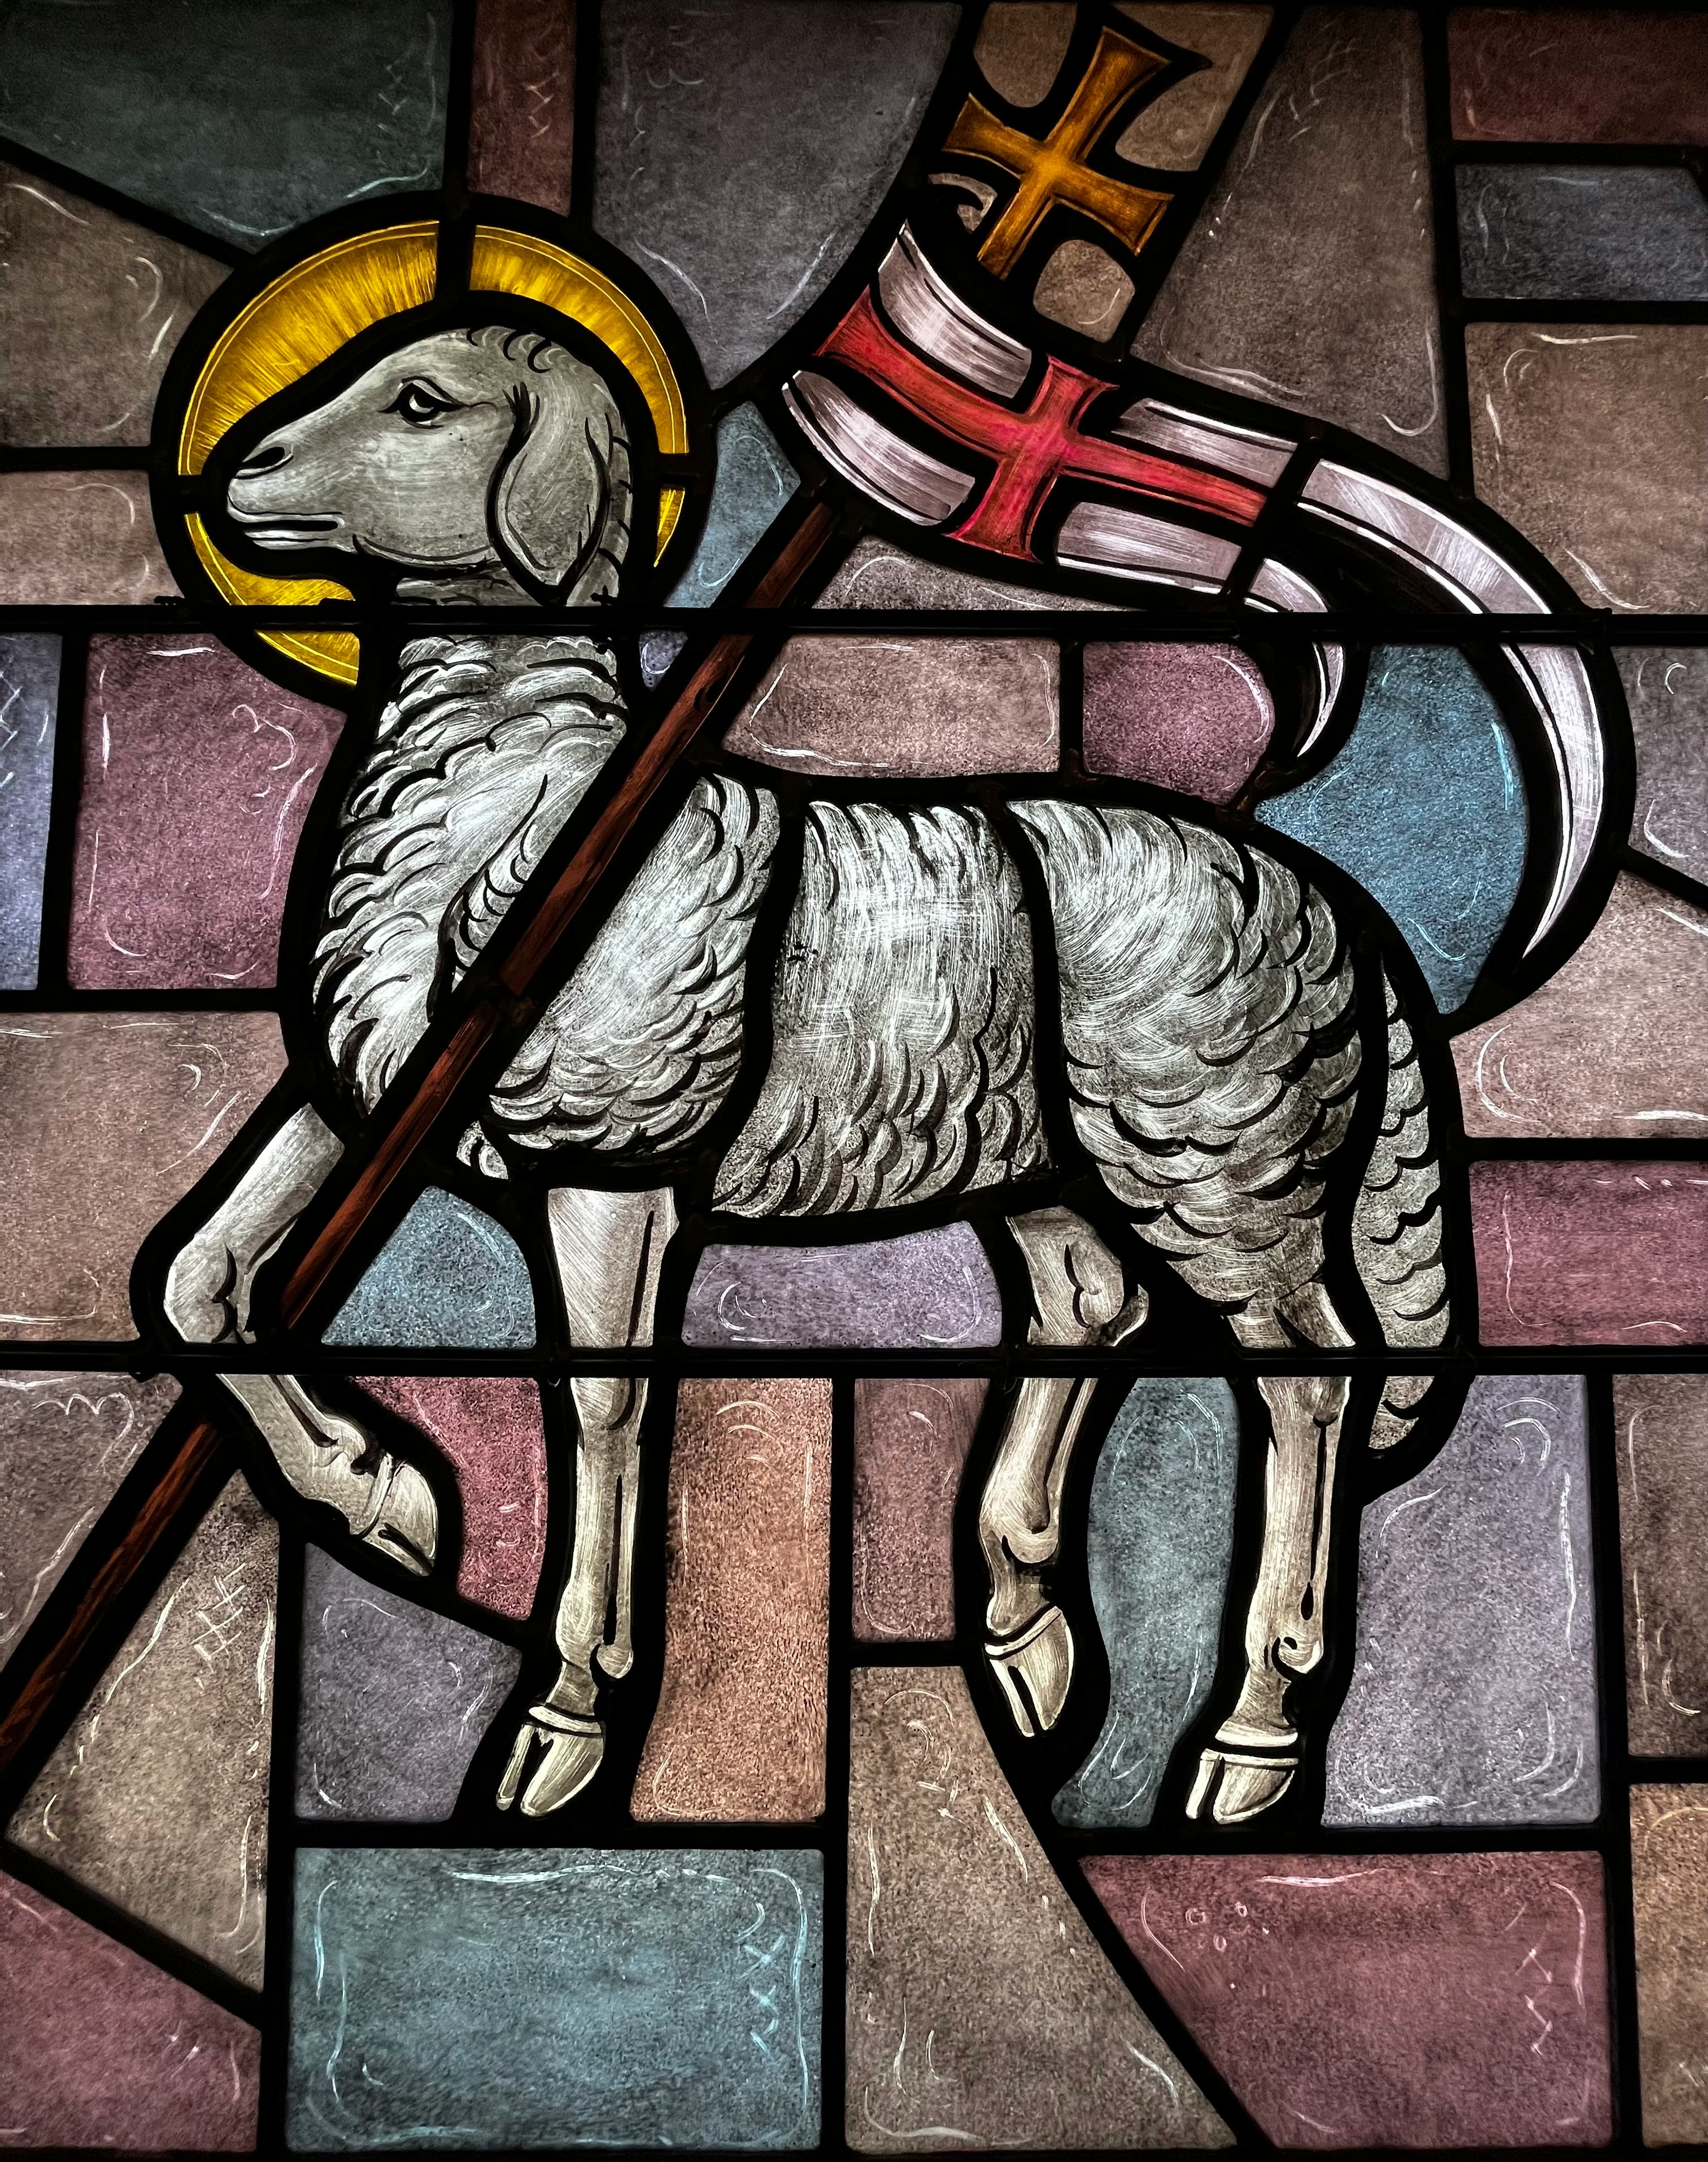 An Agnus Dei in a stained glass window from the rural Trinity Episcopal Church in Henrietta, TX.